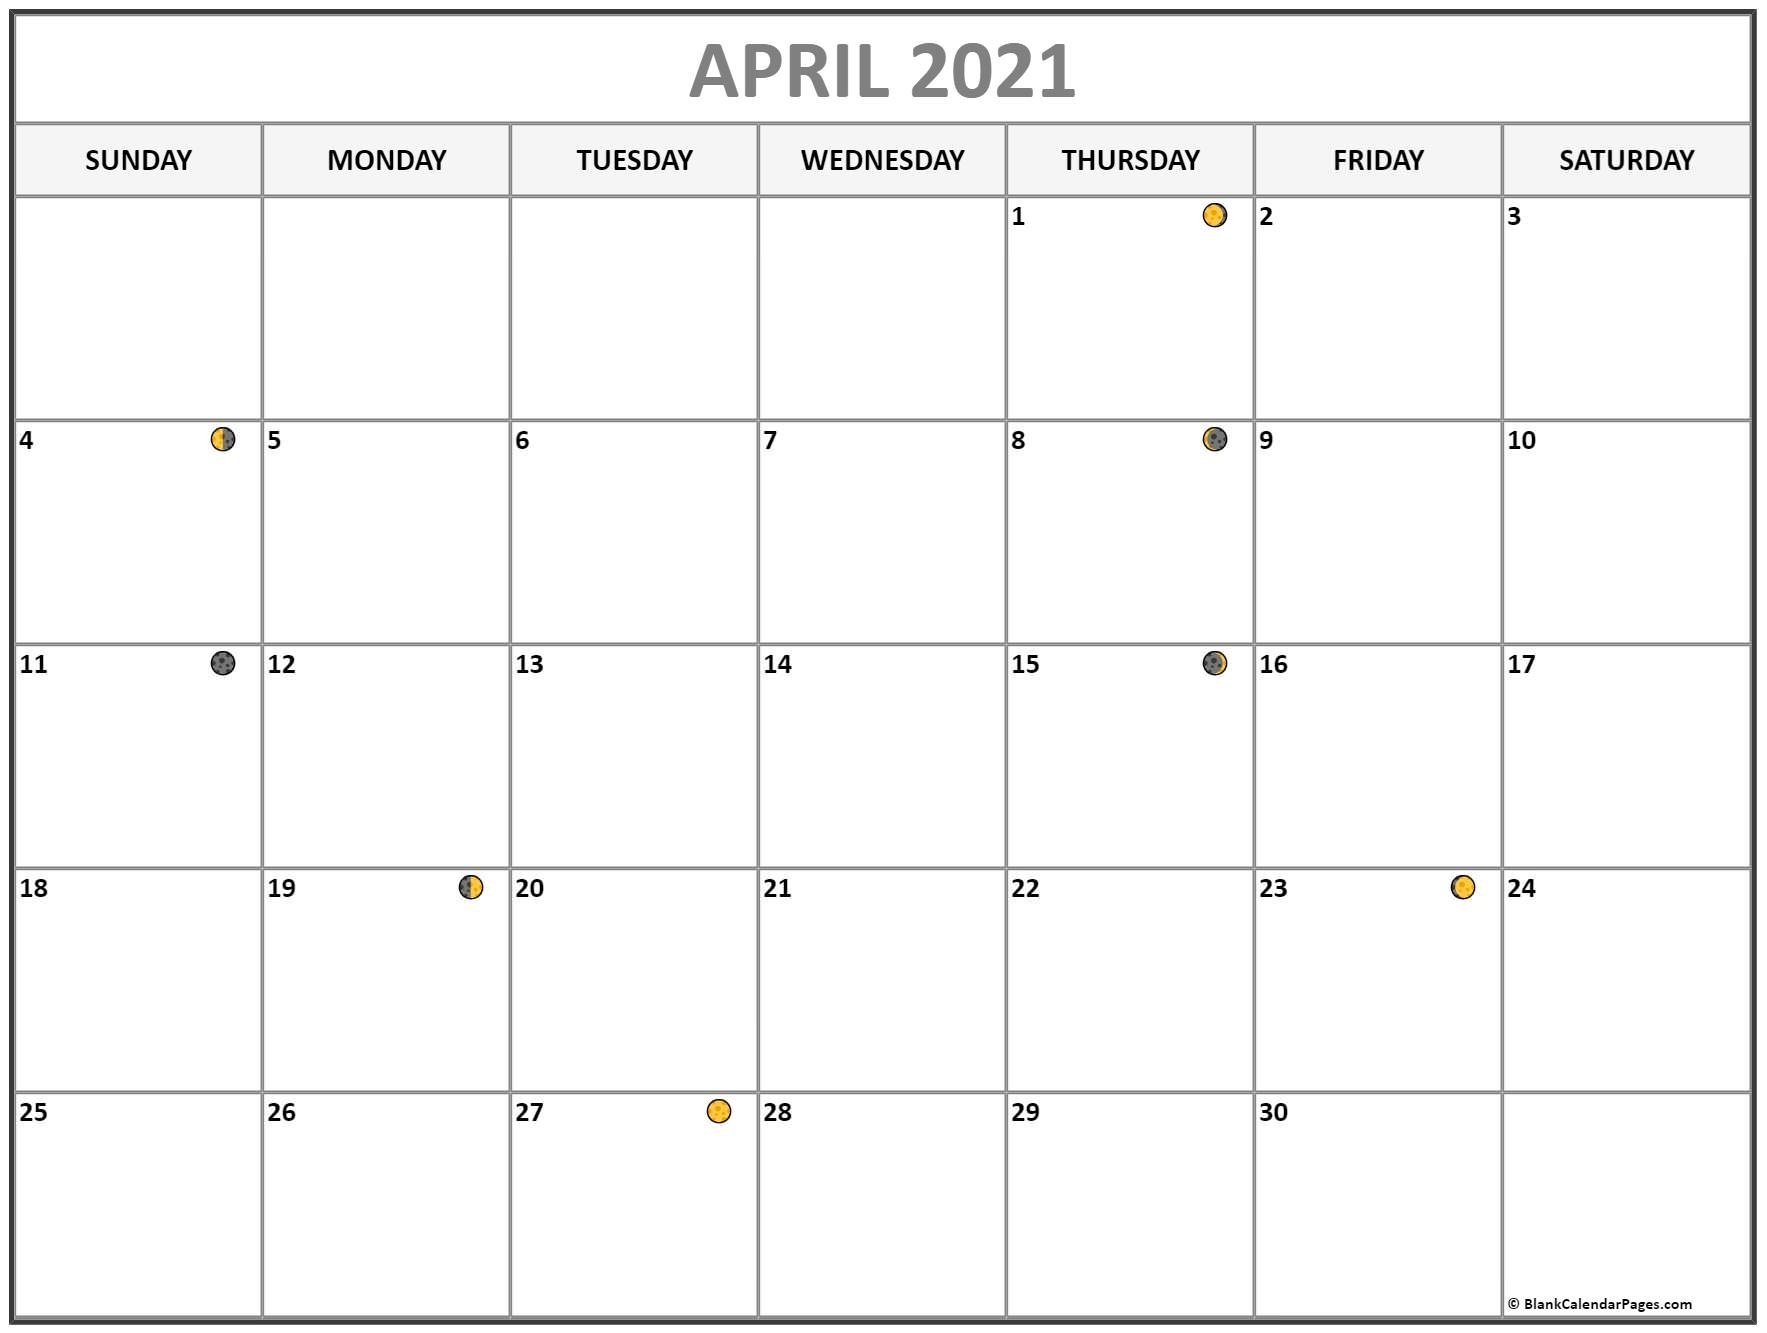 April 2021 Lunar Calendar | Moon Phase Calendar